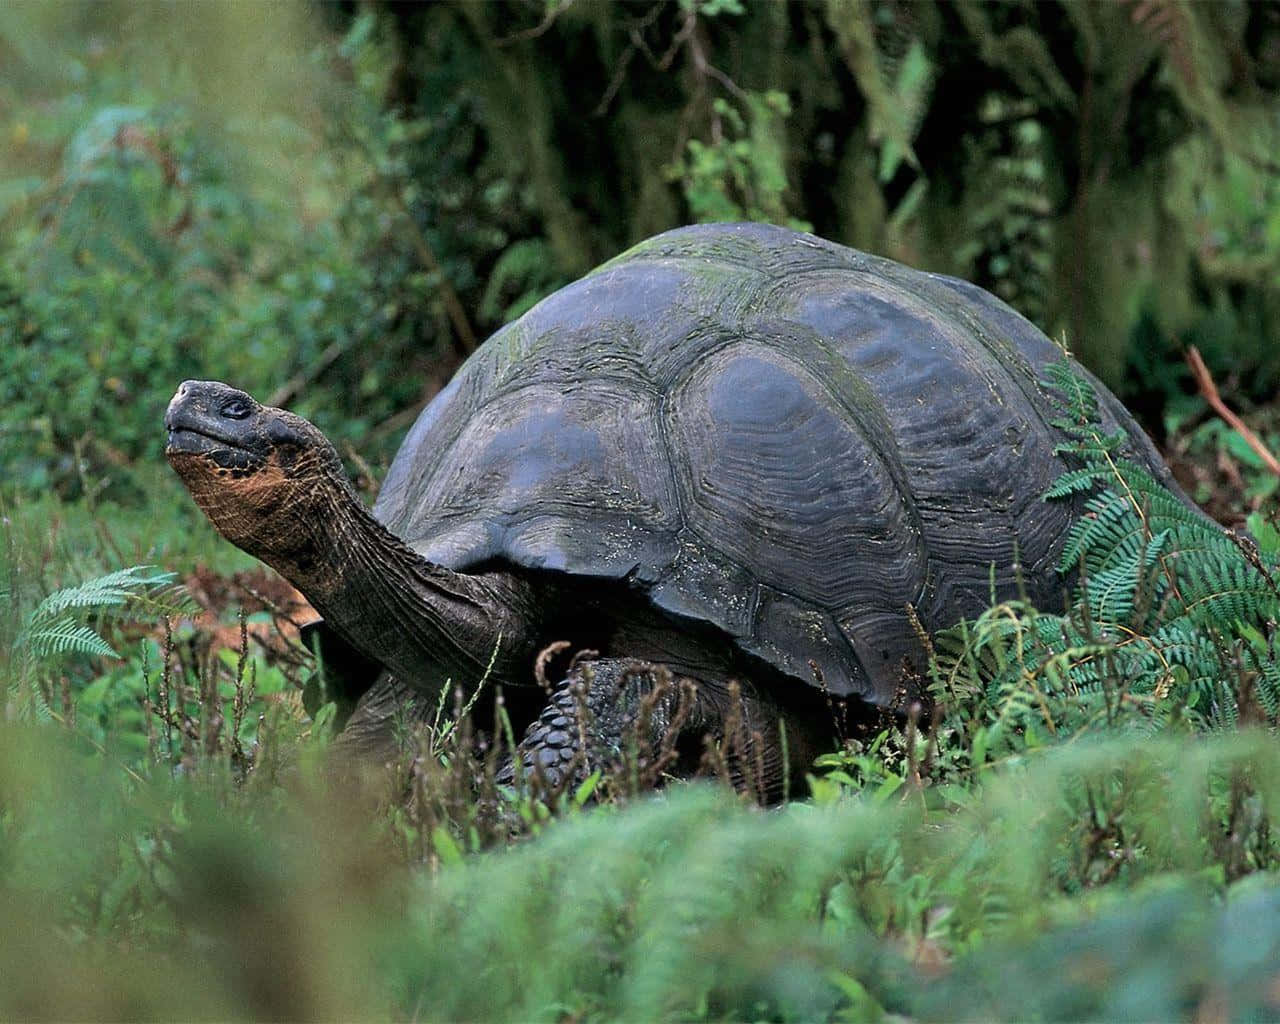 Caption: Stunning Close-up of a Beautiful Tortoise